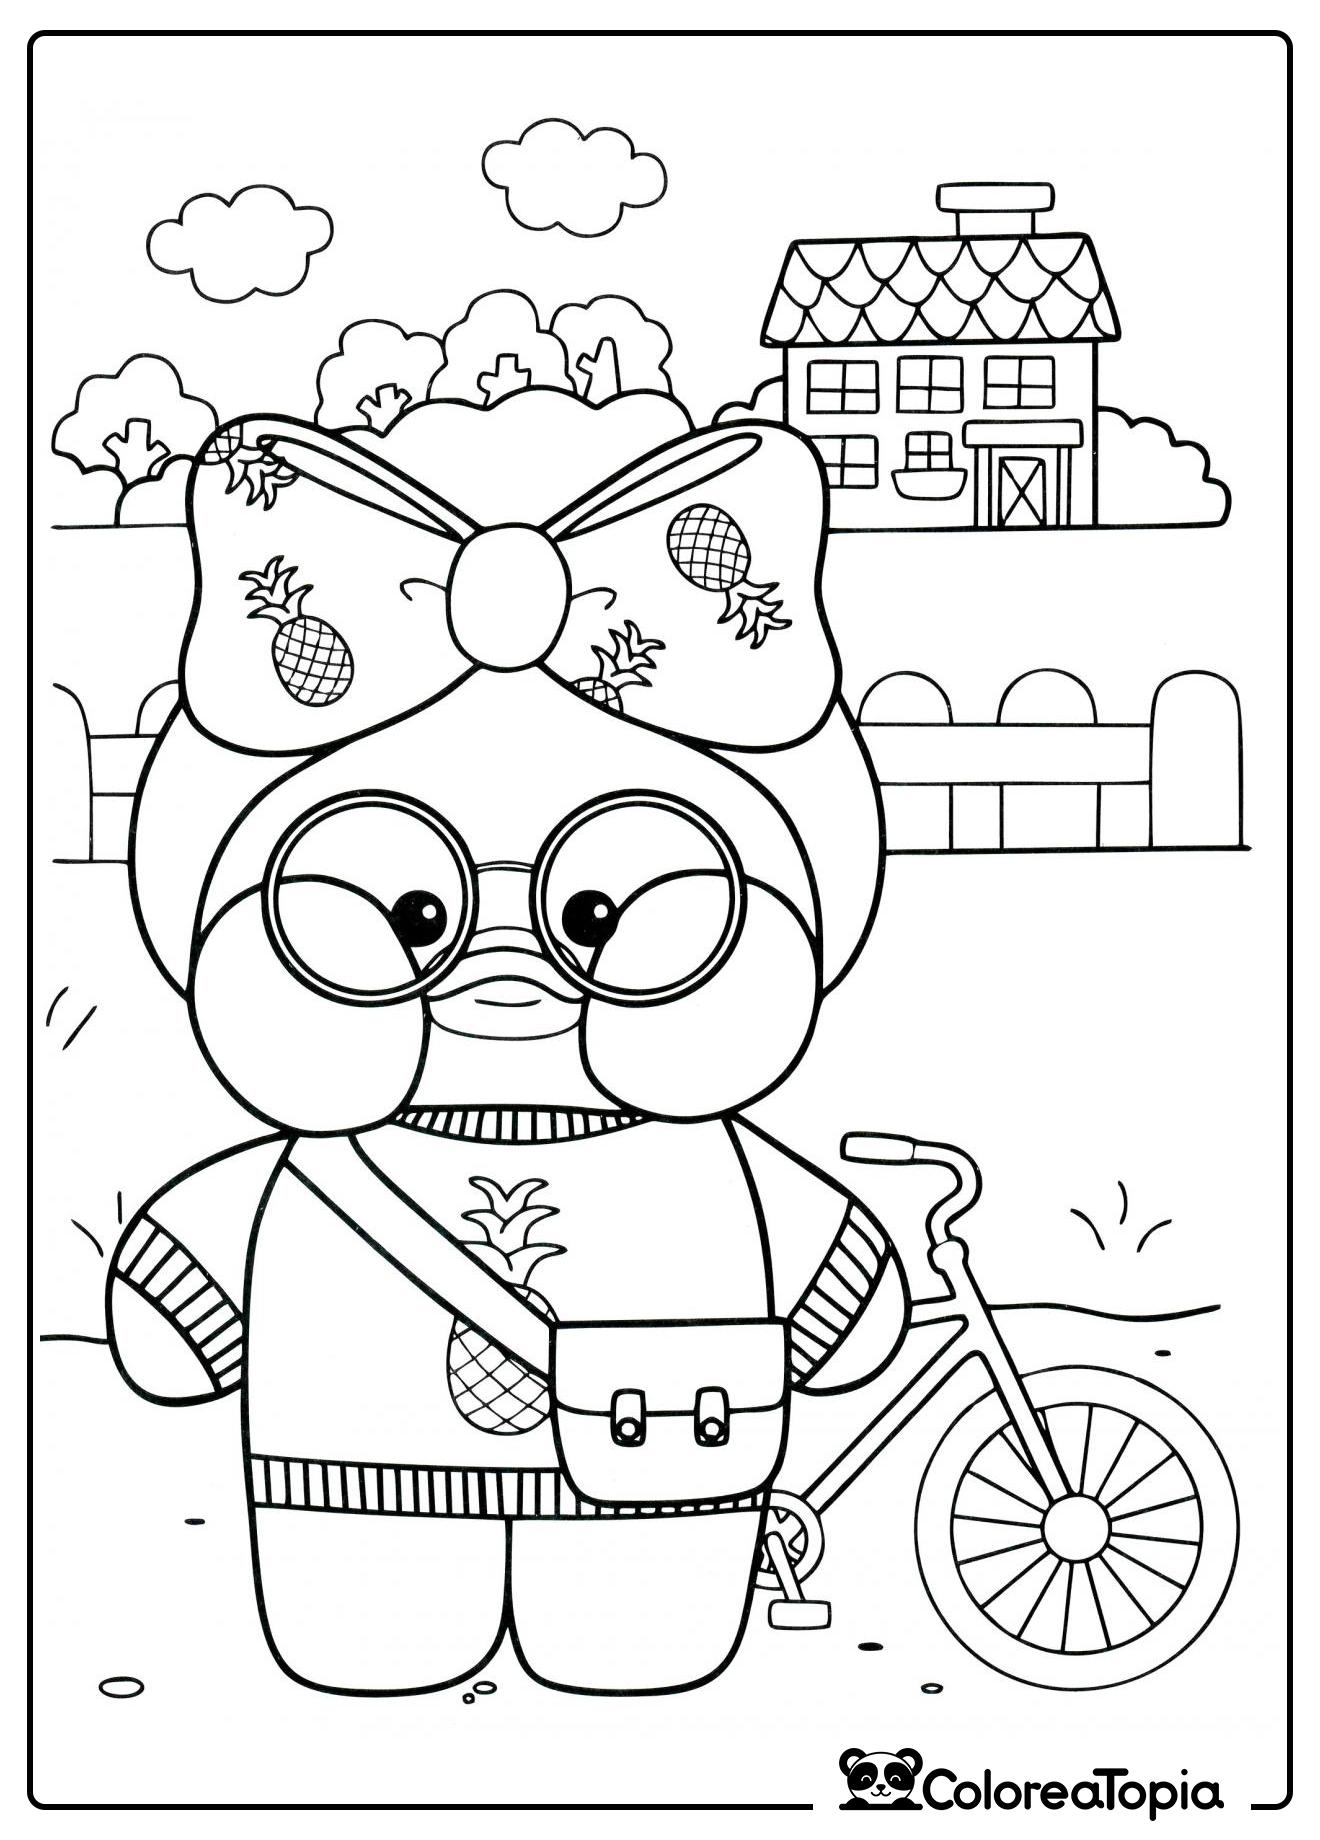 Pato en bicicleta - dibujo para colorear